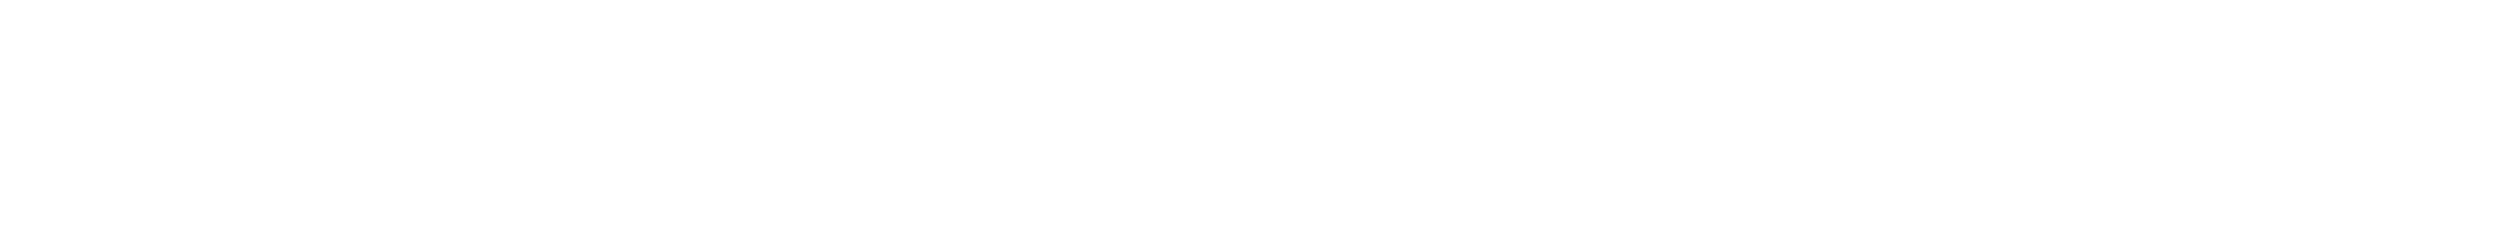 Divider logo image at Sierra Verde in Surprise, Arizona